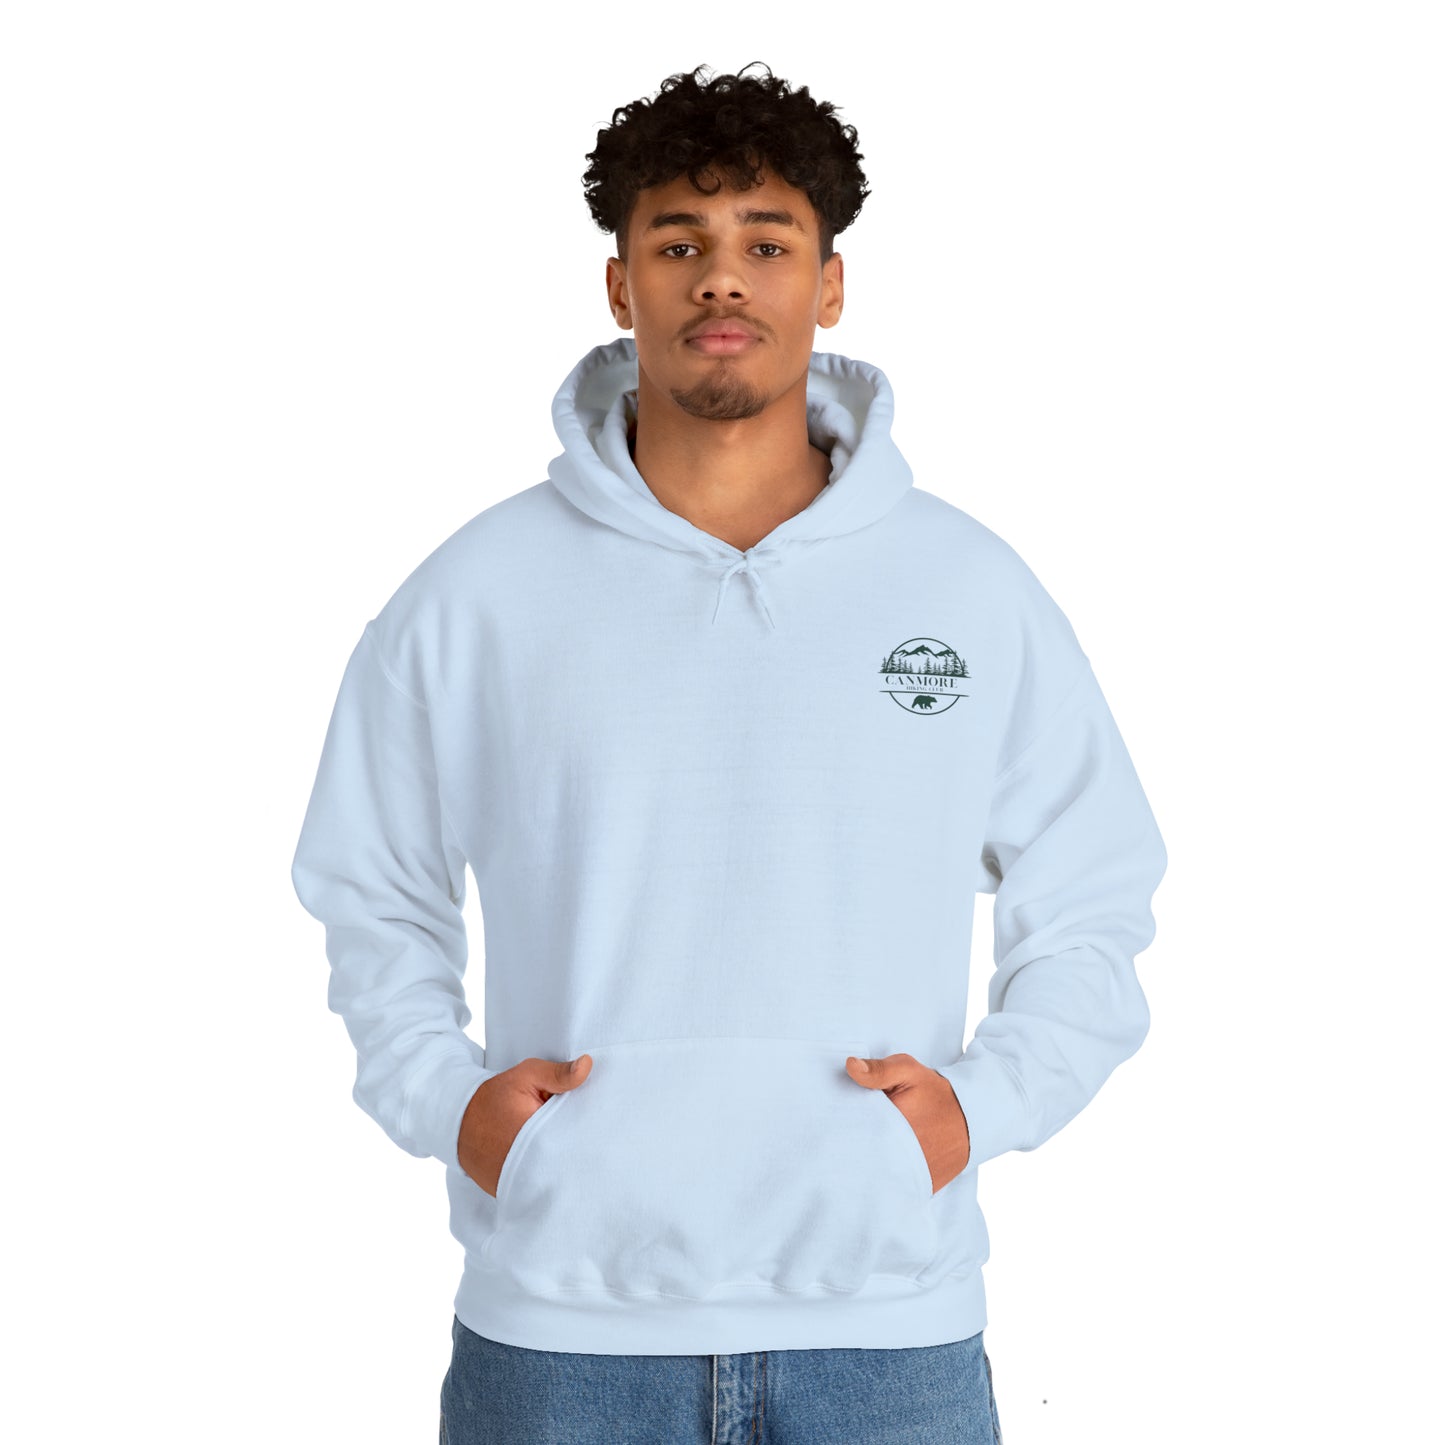 Canmore Hiking Club - Unisex Heavy Blend™ Hooded Sweatshirt